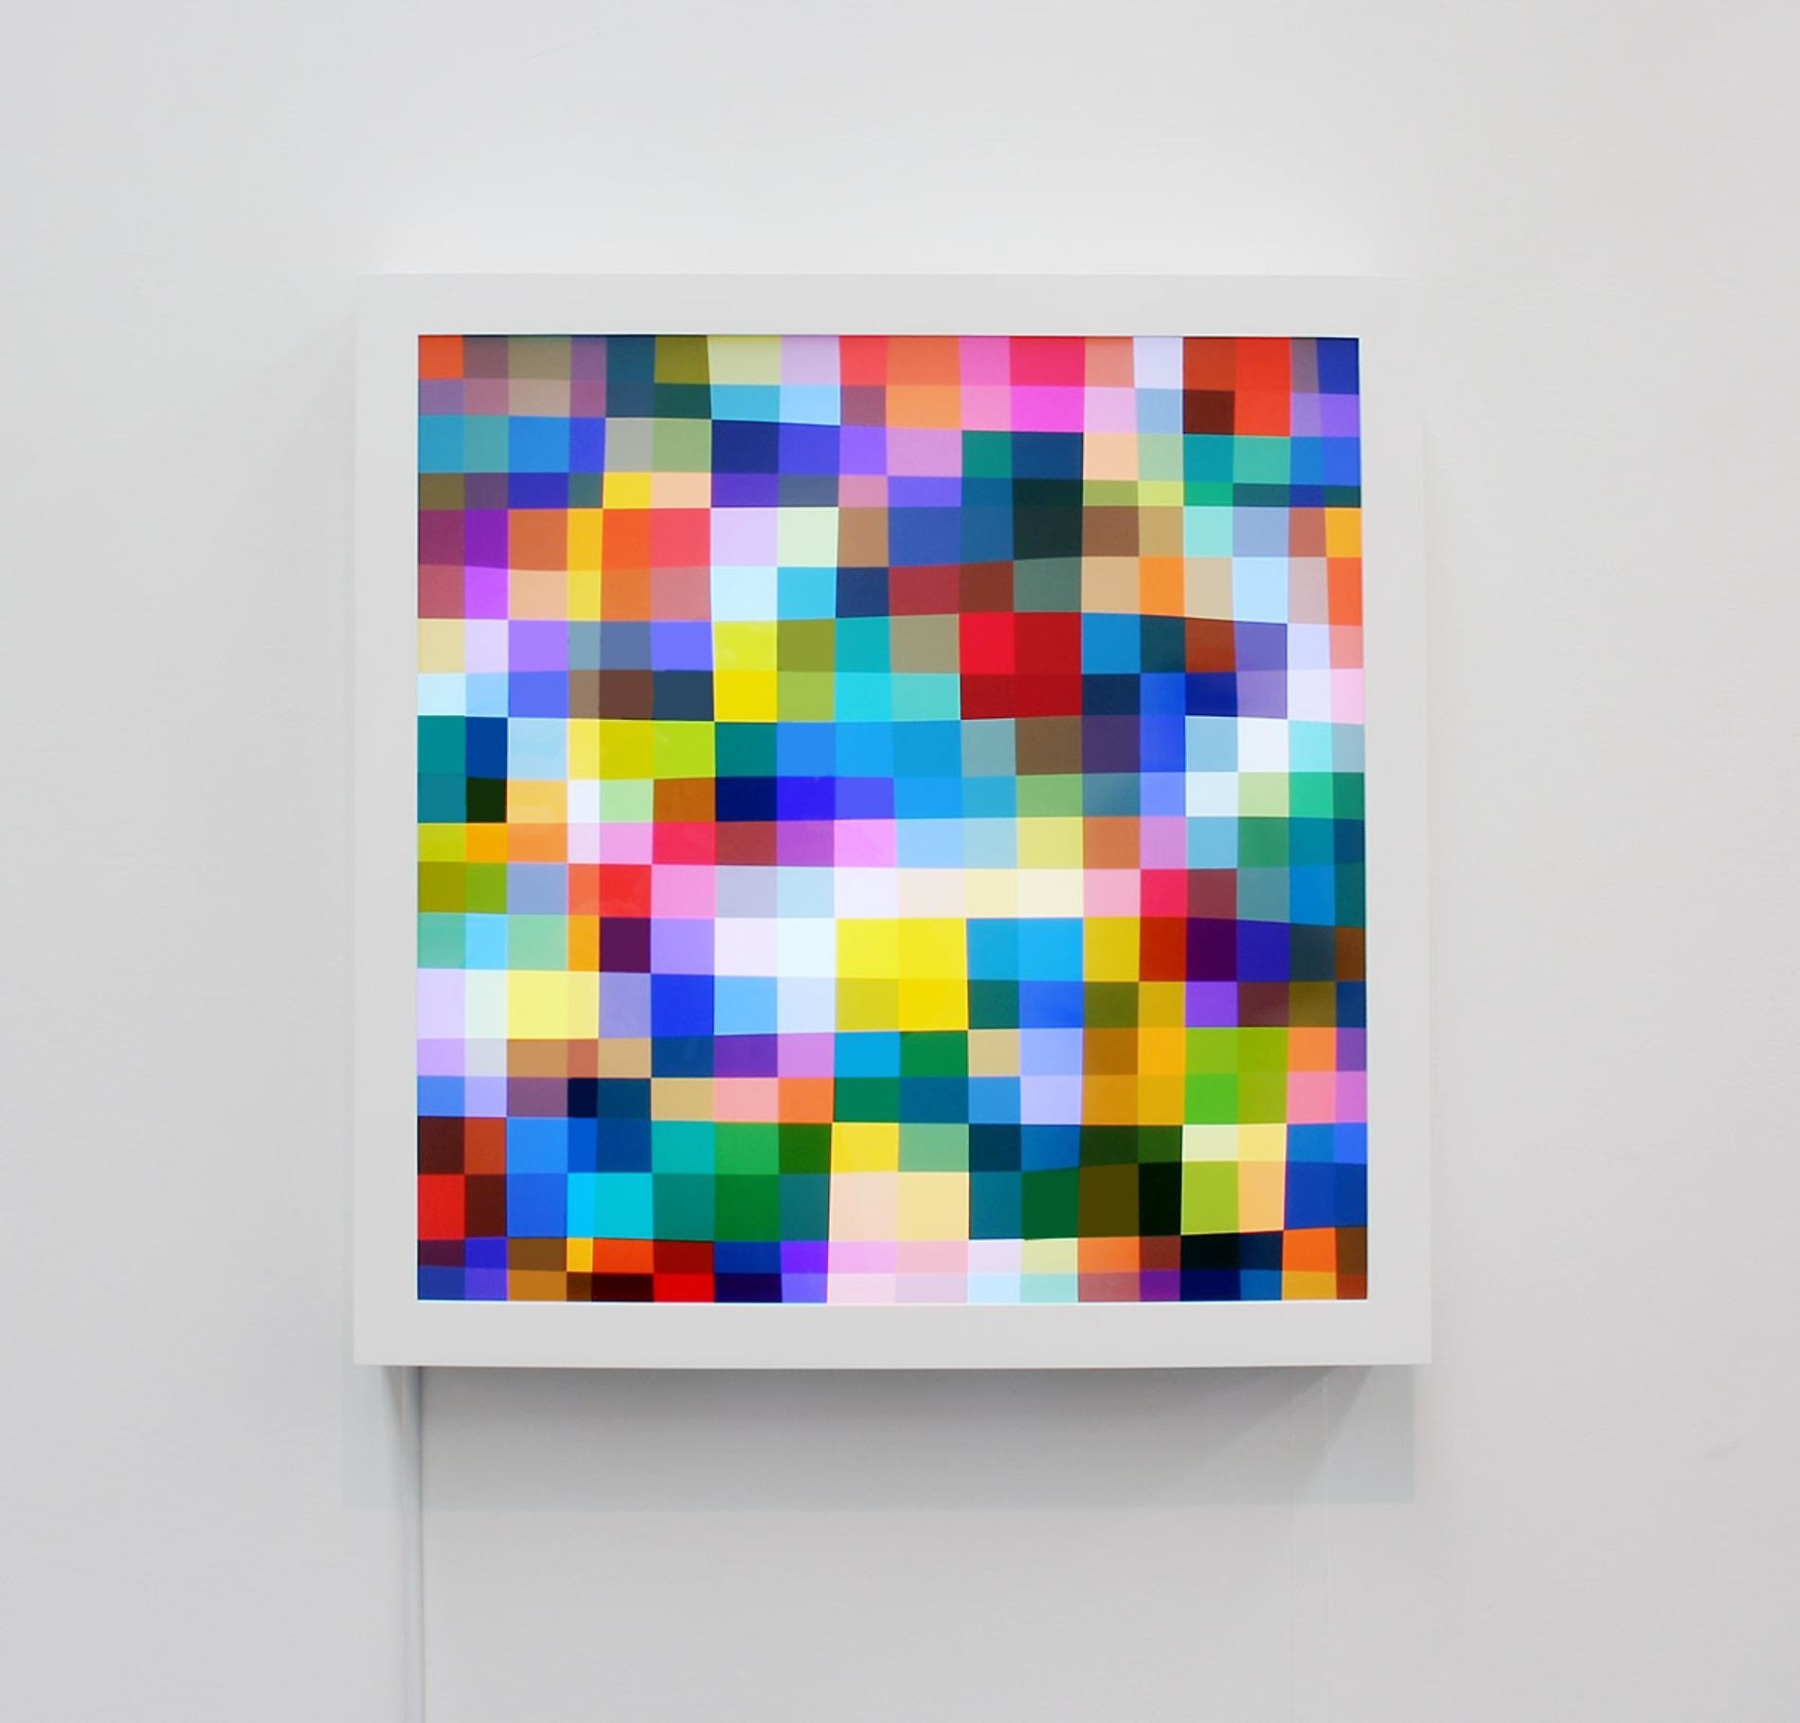 Image of Spencer Finch's Color Test (360),&nbsp;2014